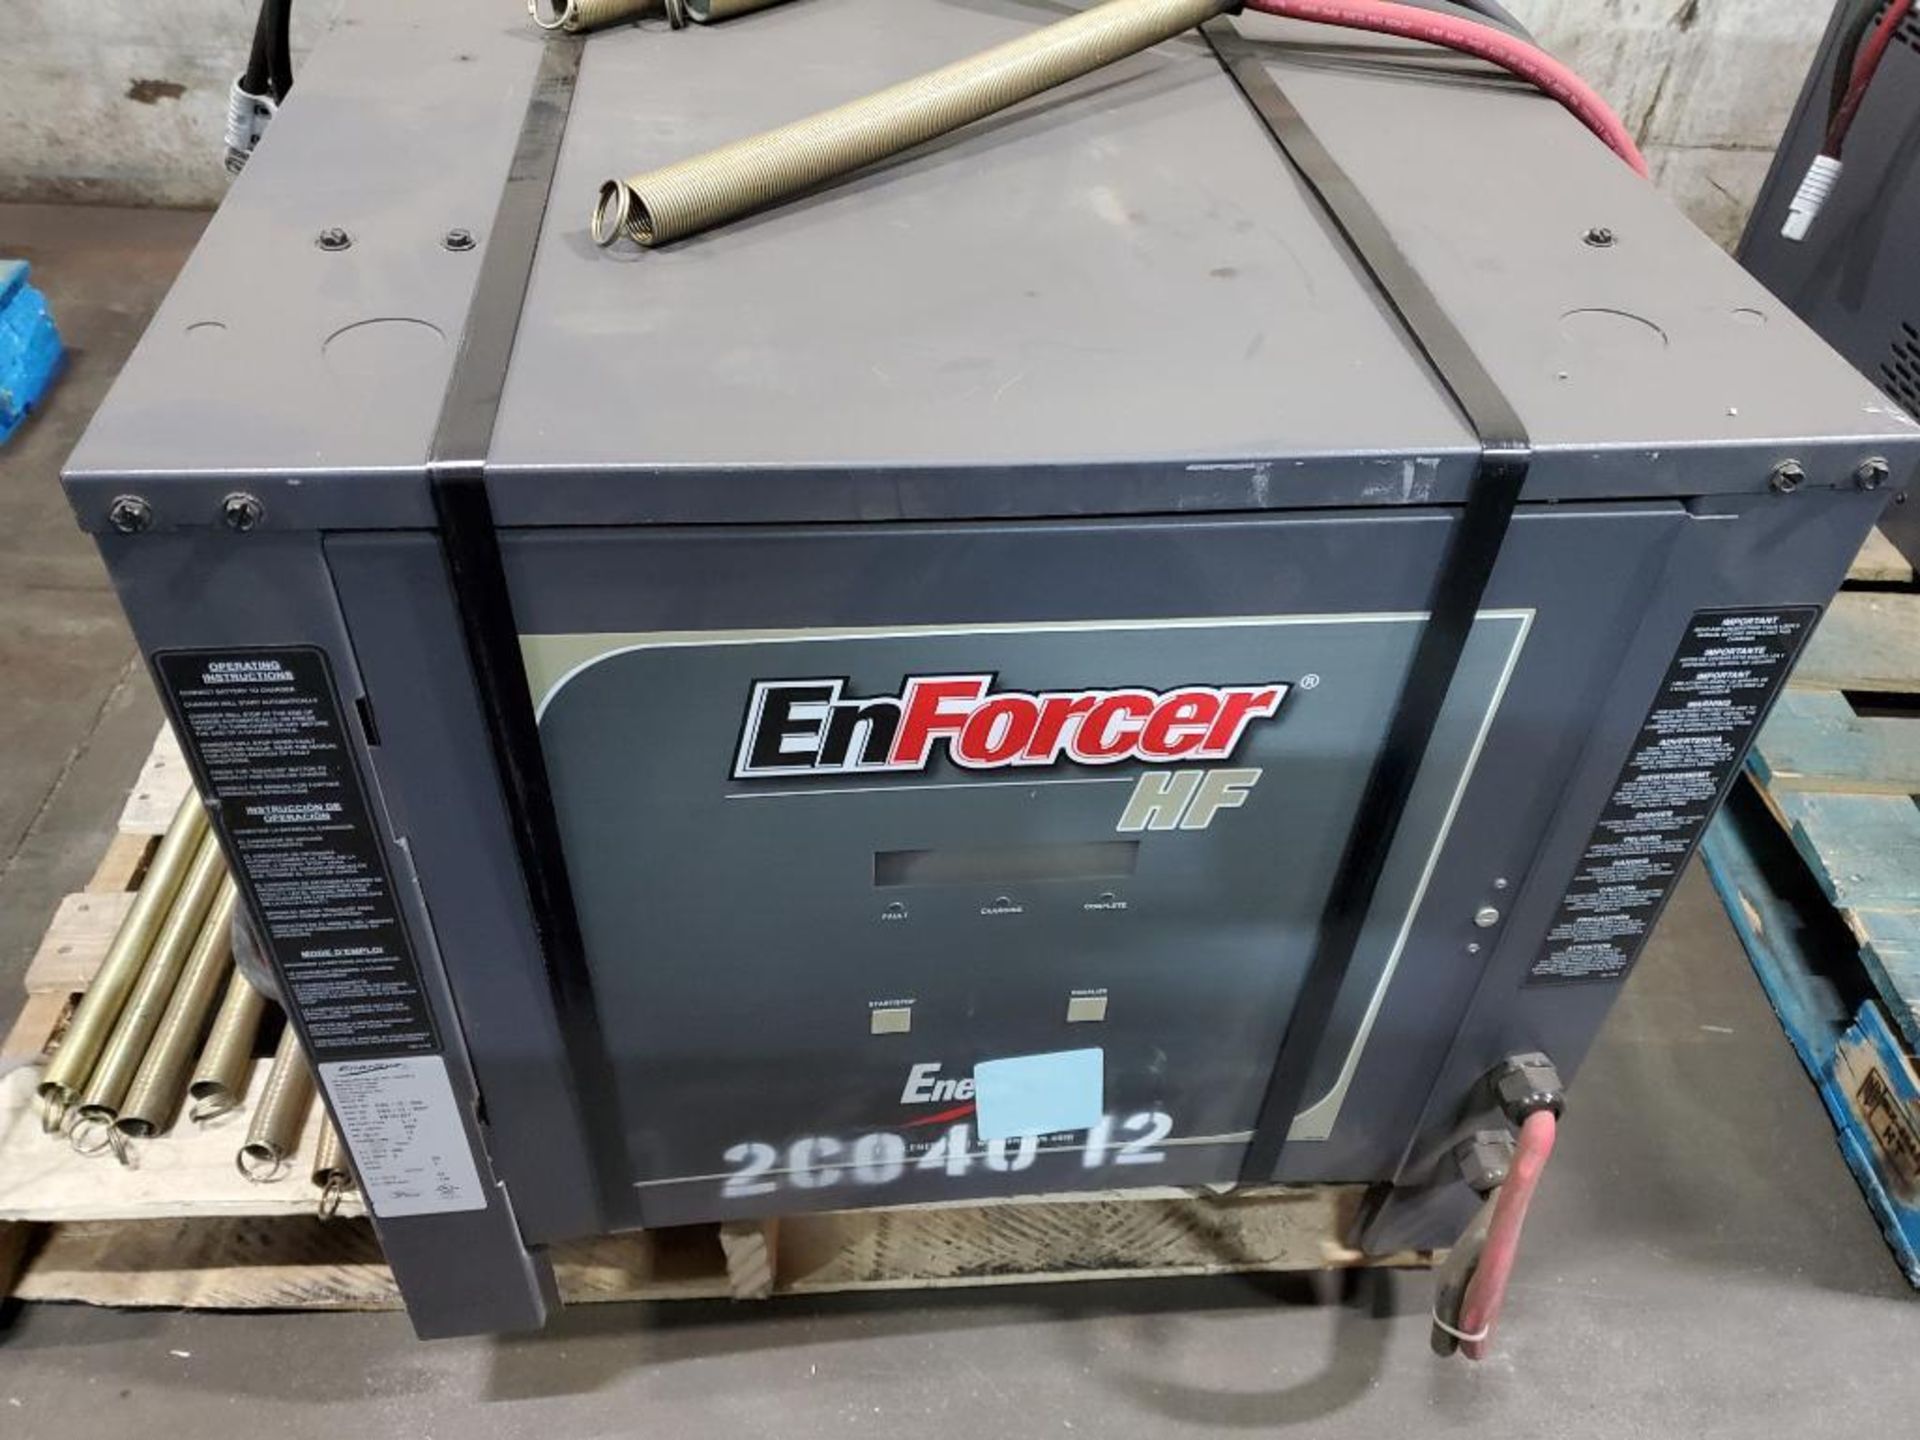 (2x) EnerSys Enforcer Battery Chargers, Model EH3-12-900, Input: 480V, 3-Phase, Output: 24V, 145 Amp - Image 2 of 5